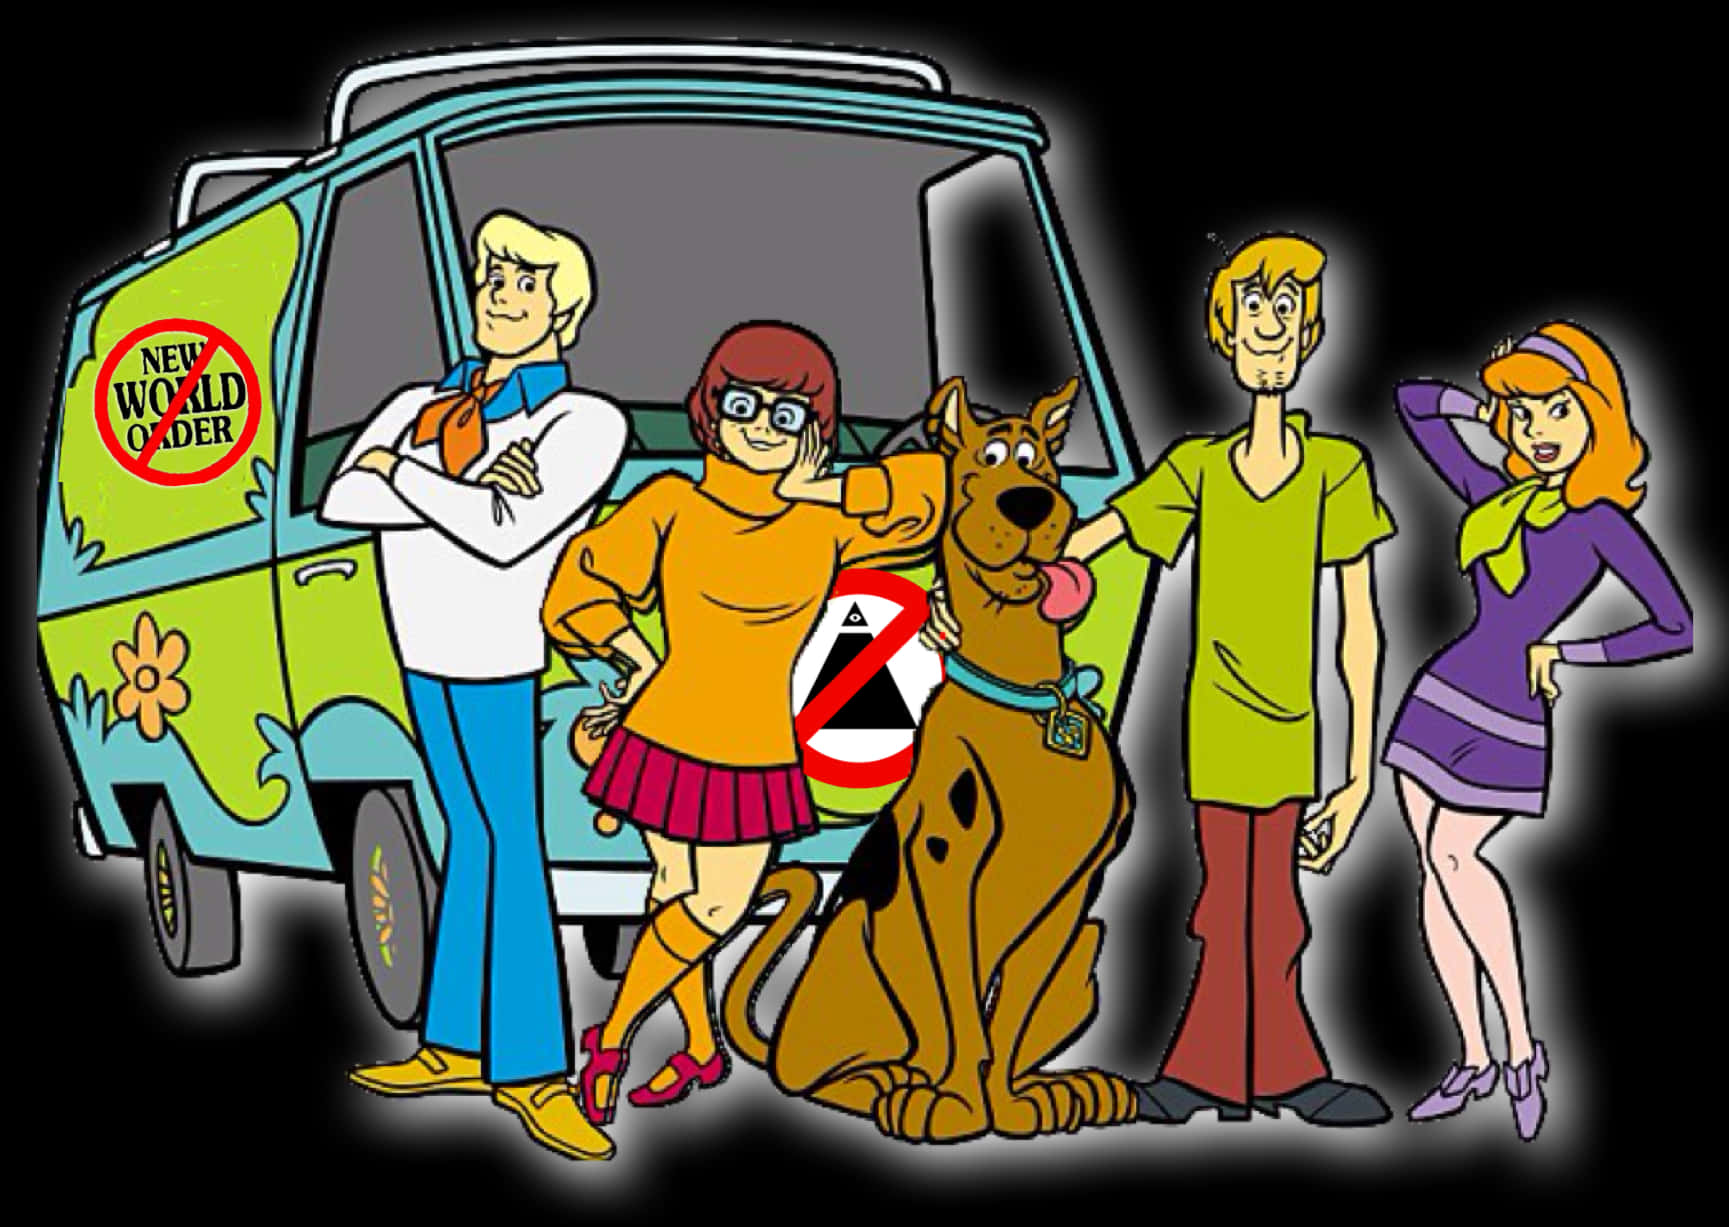 Cartoon Characters Standing Next To A Van